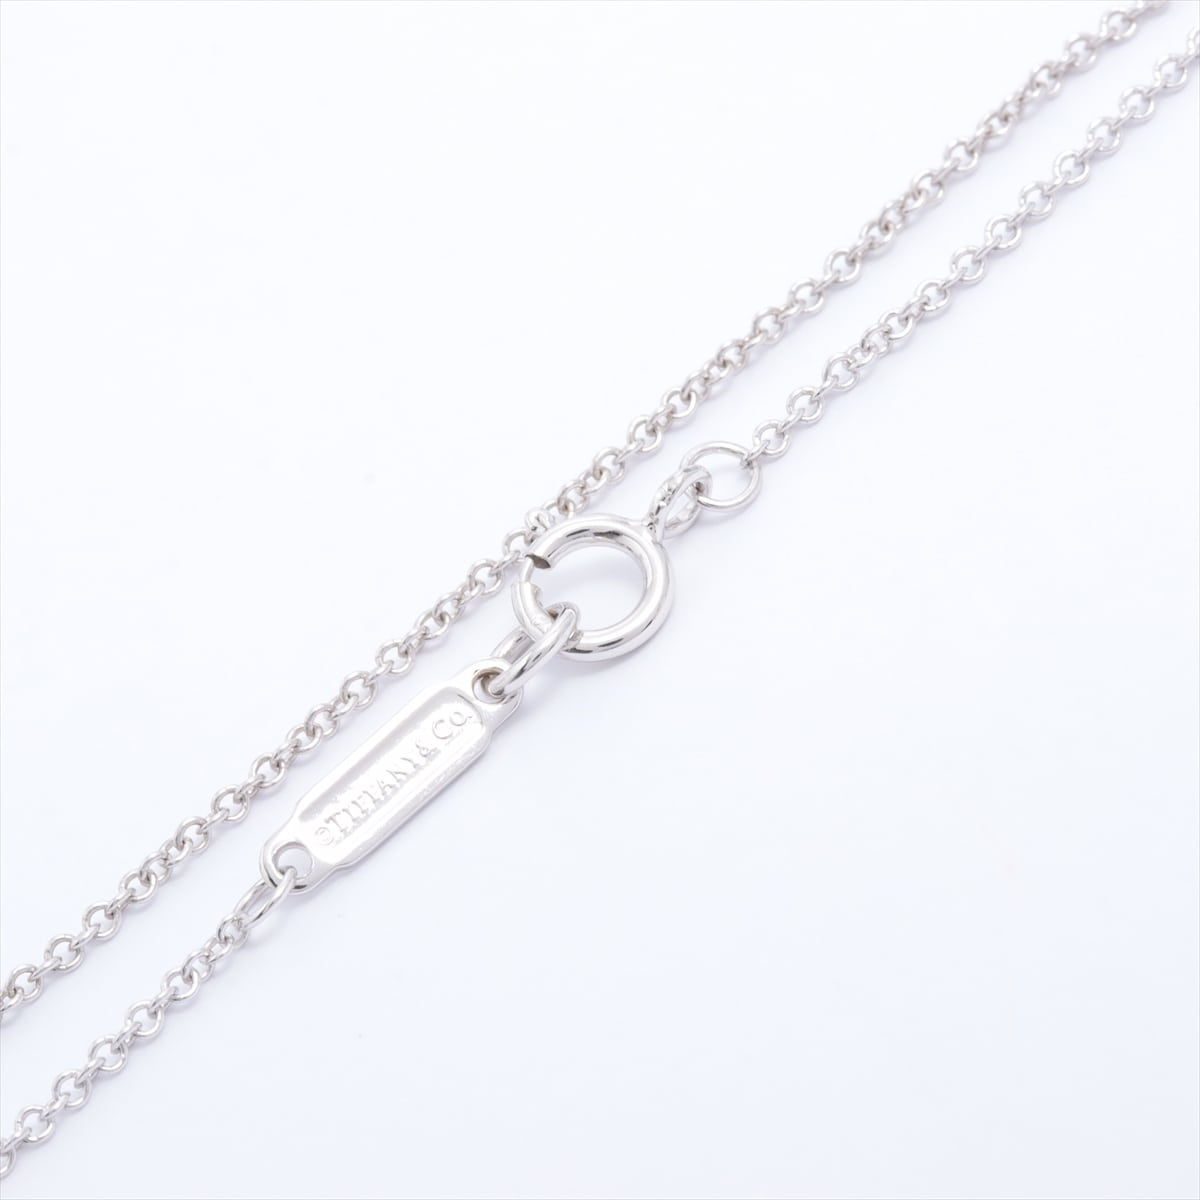 Tiffany Atlas Open medallions diamond Necklace 750 WG 3.6g